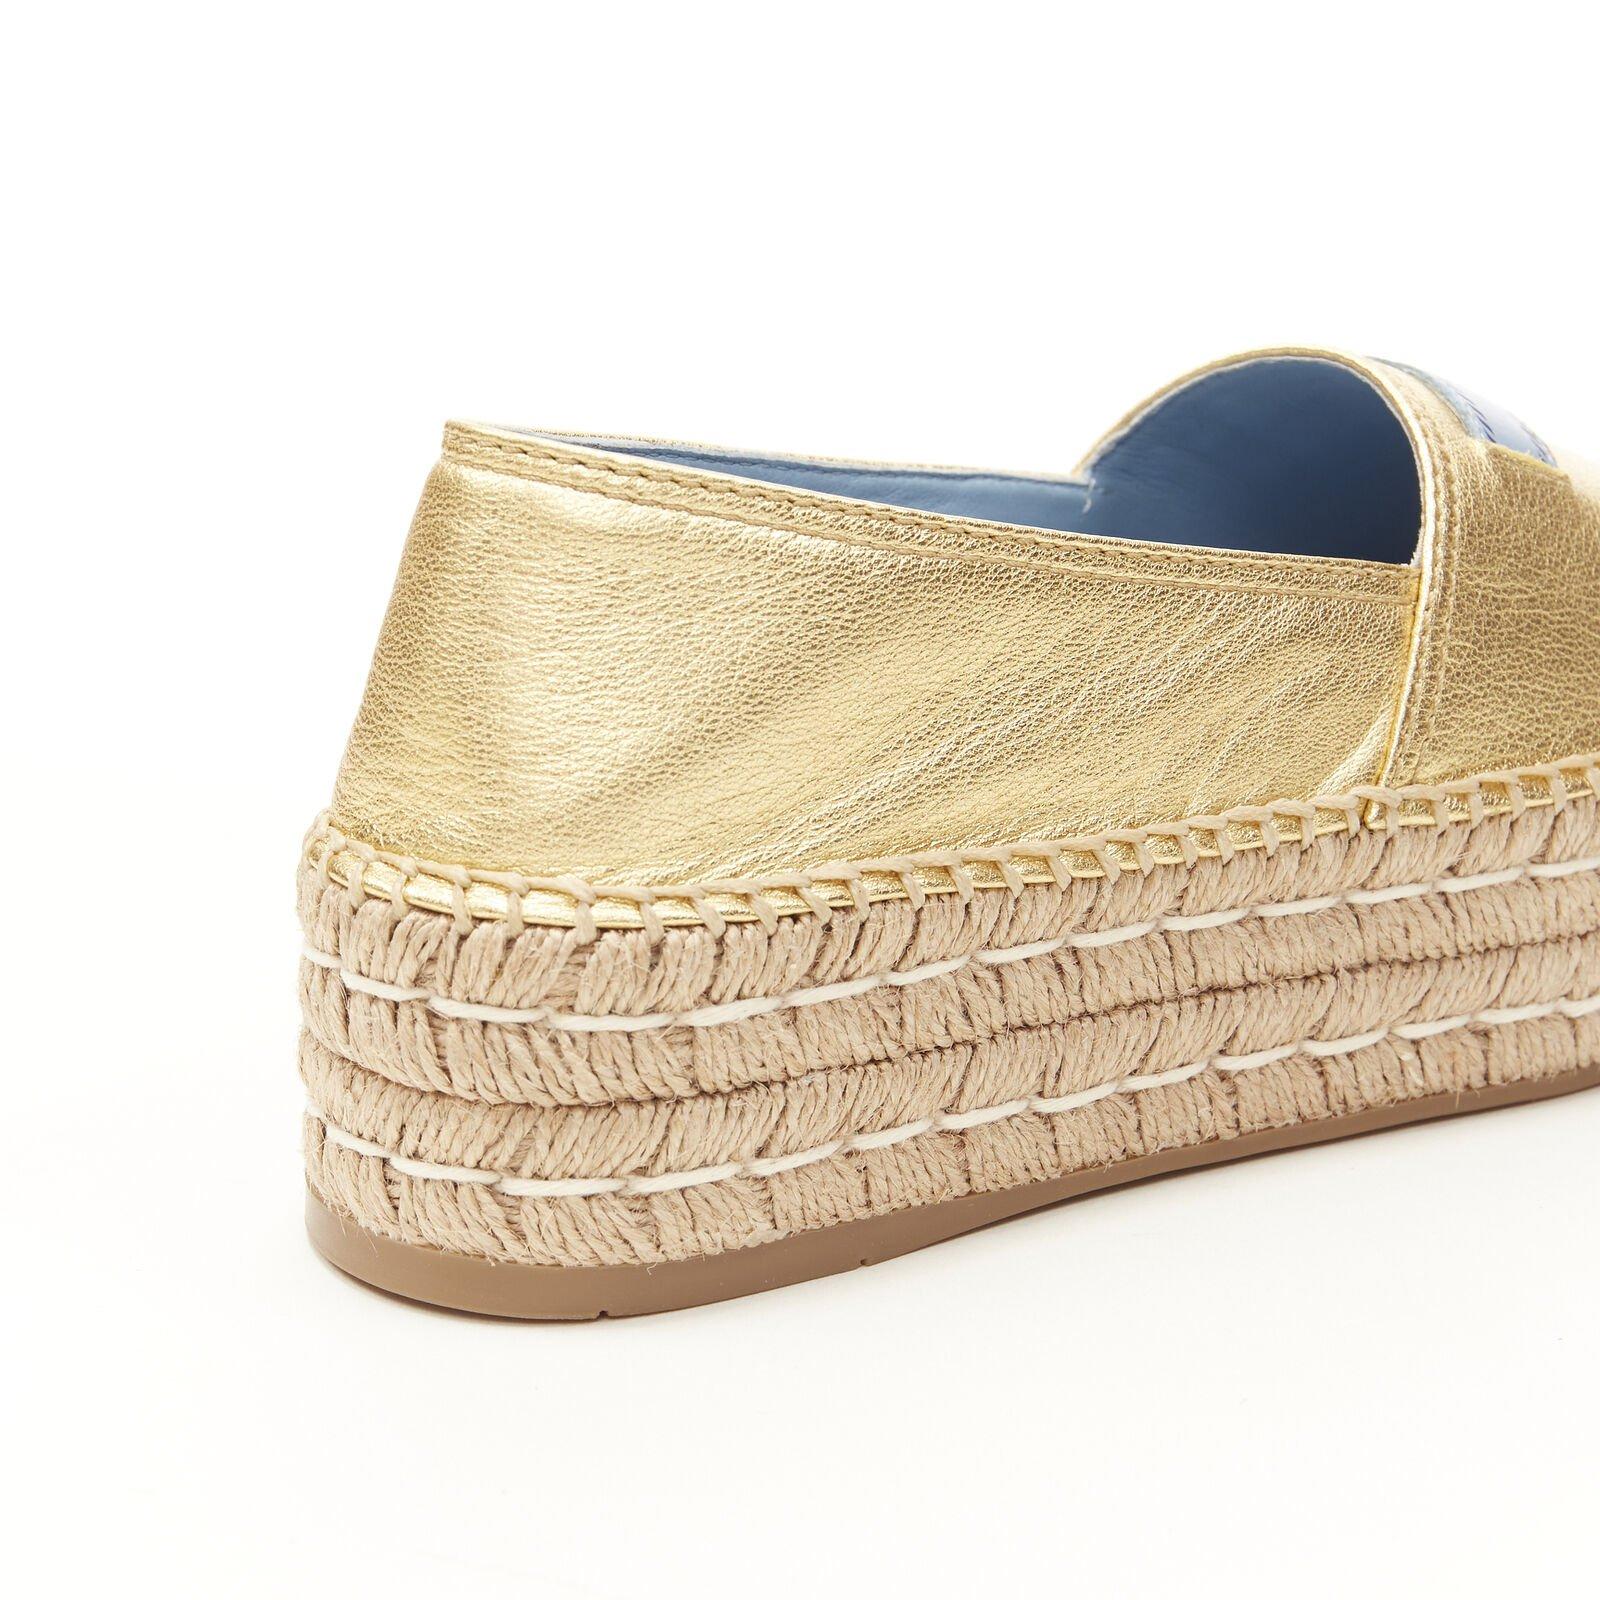 PRADA metallic gold leather logo peep toe jute platform espadrille shoe EU38 5